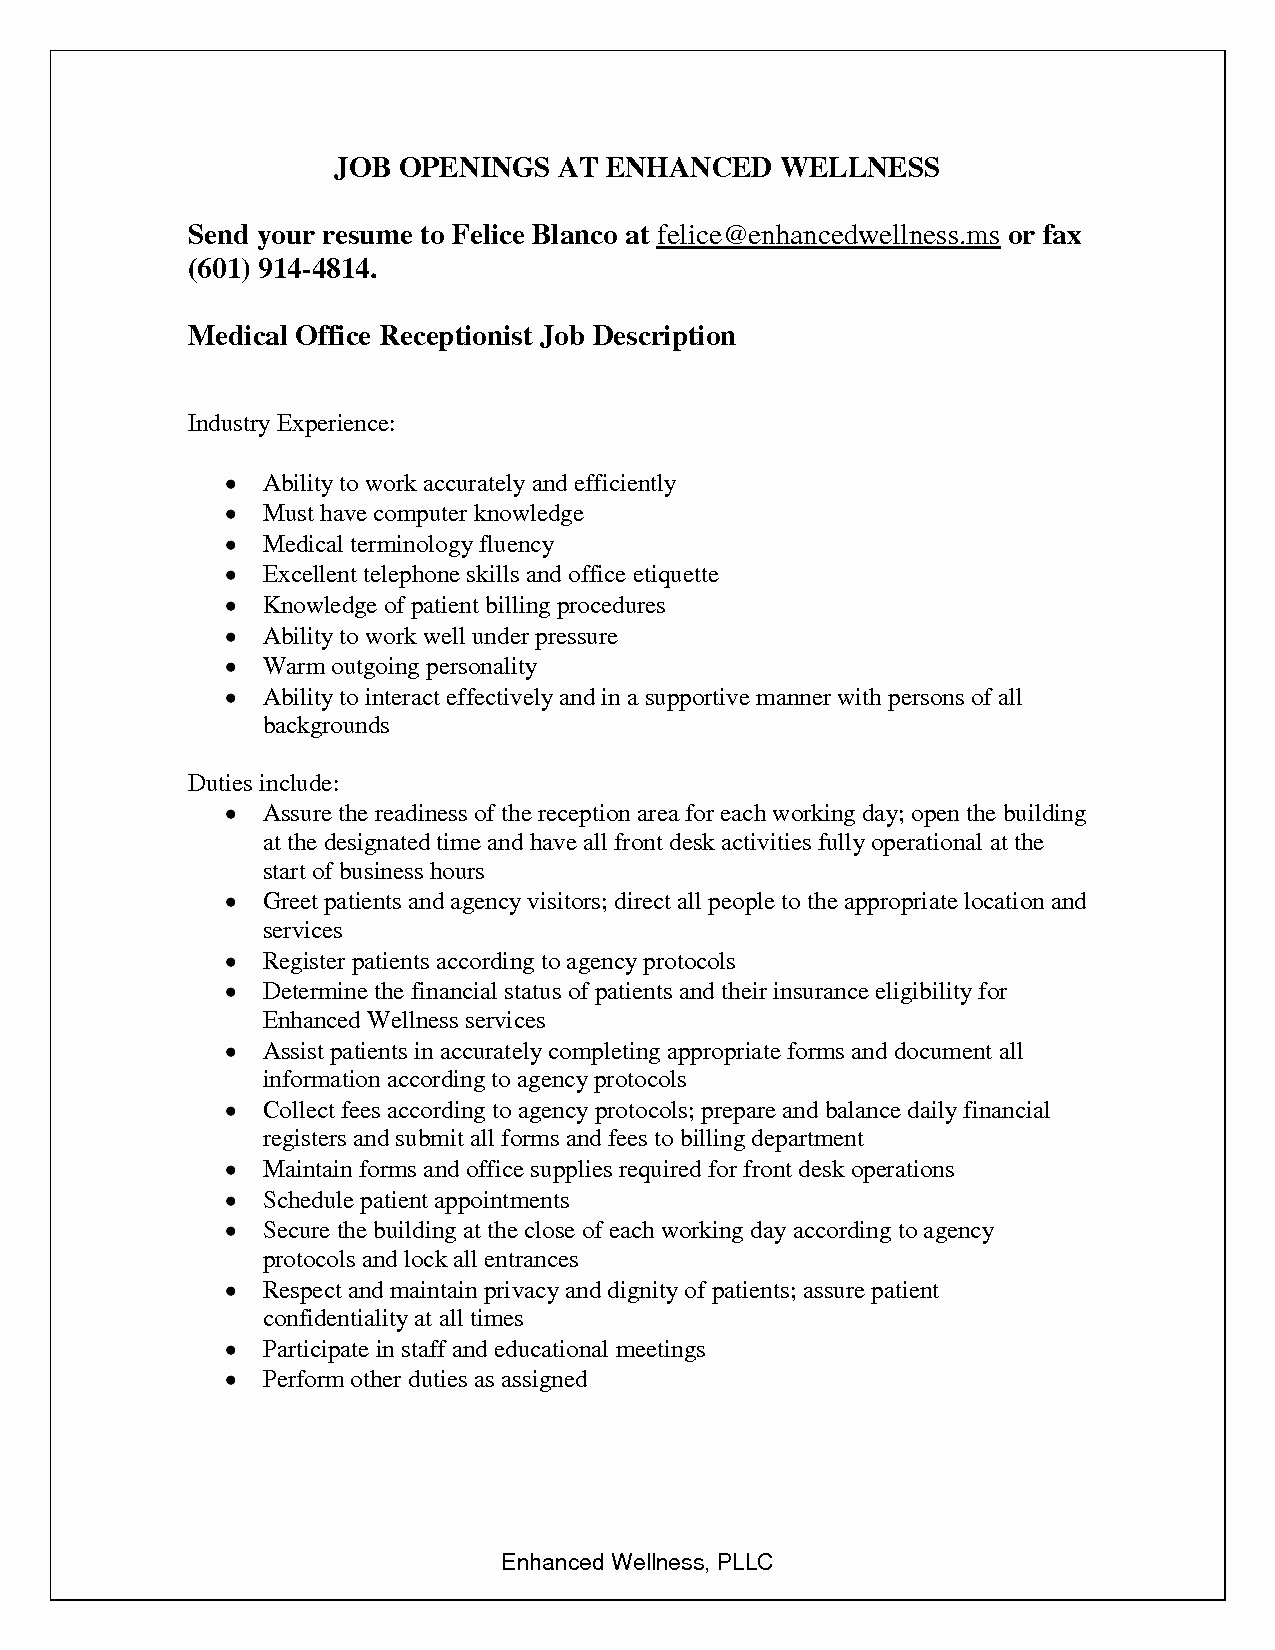 Job Opening Resume for Ofice Receptionist Job Description